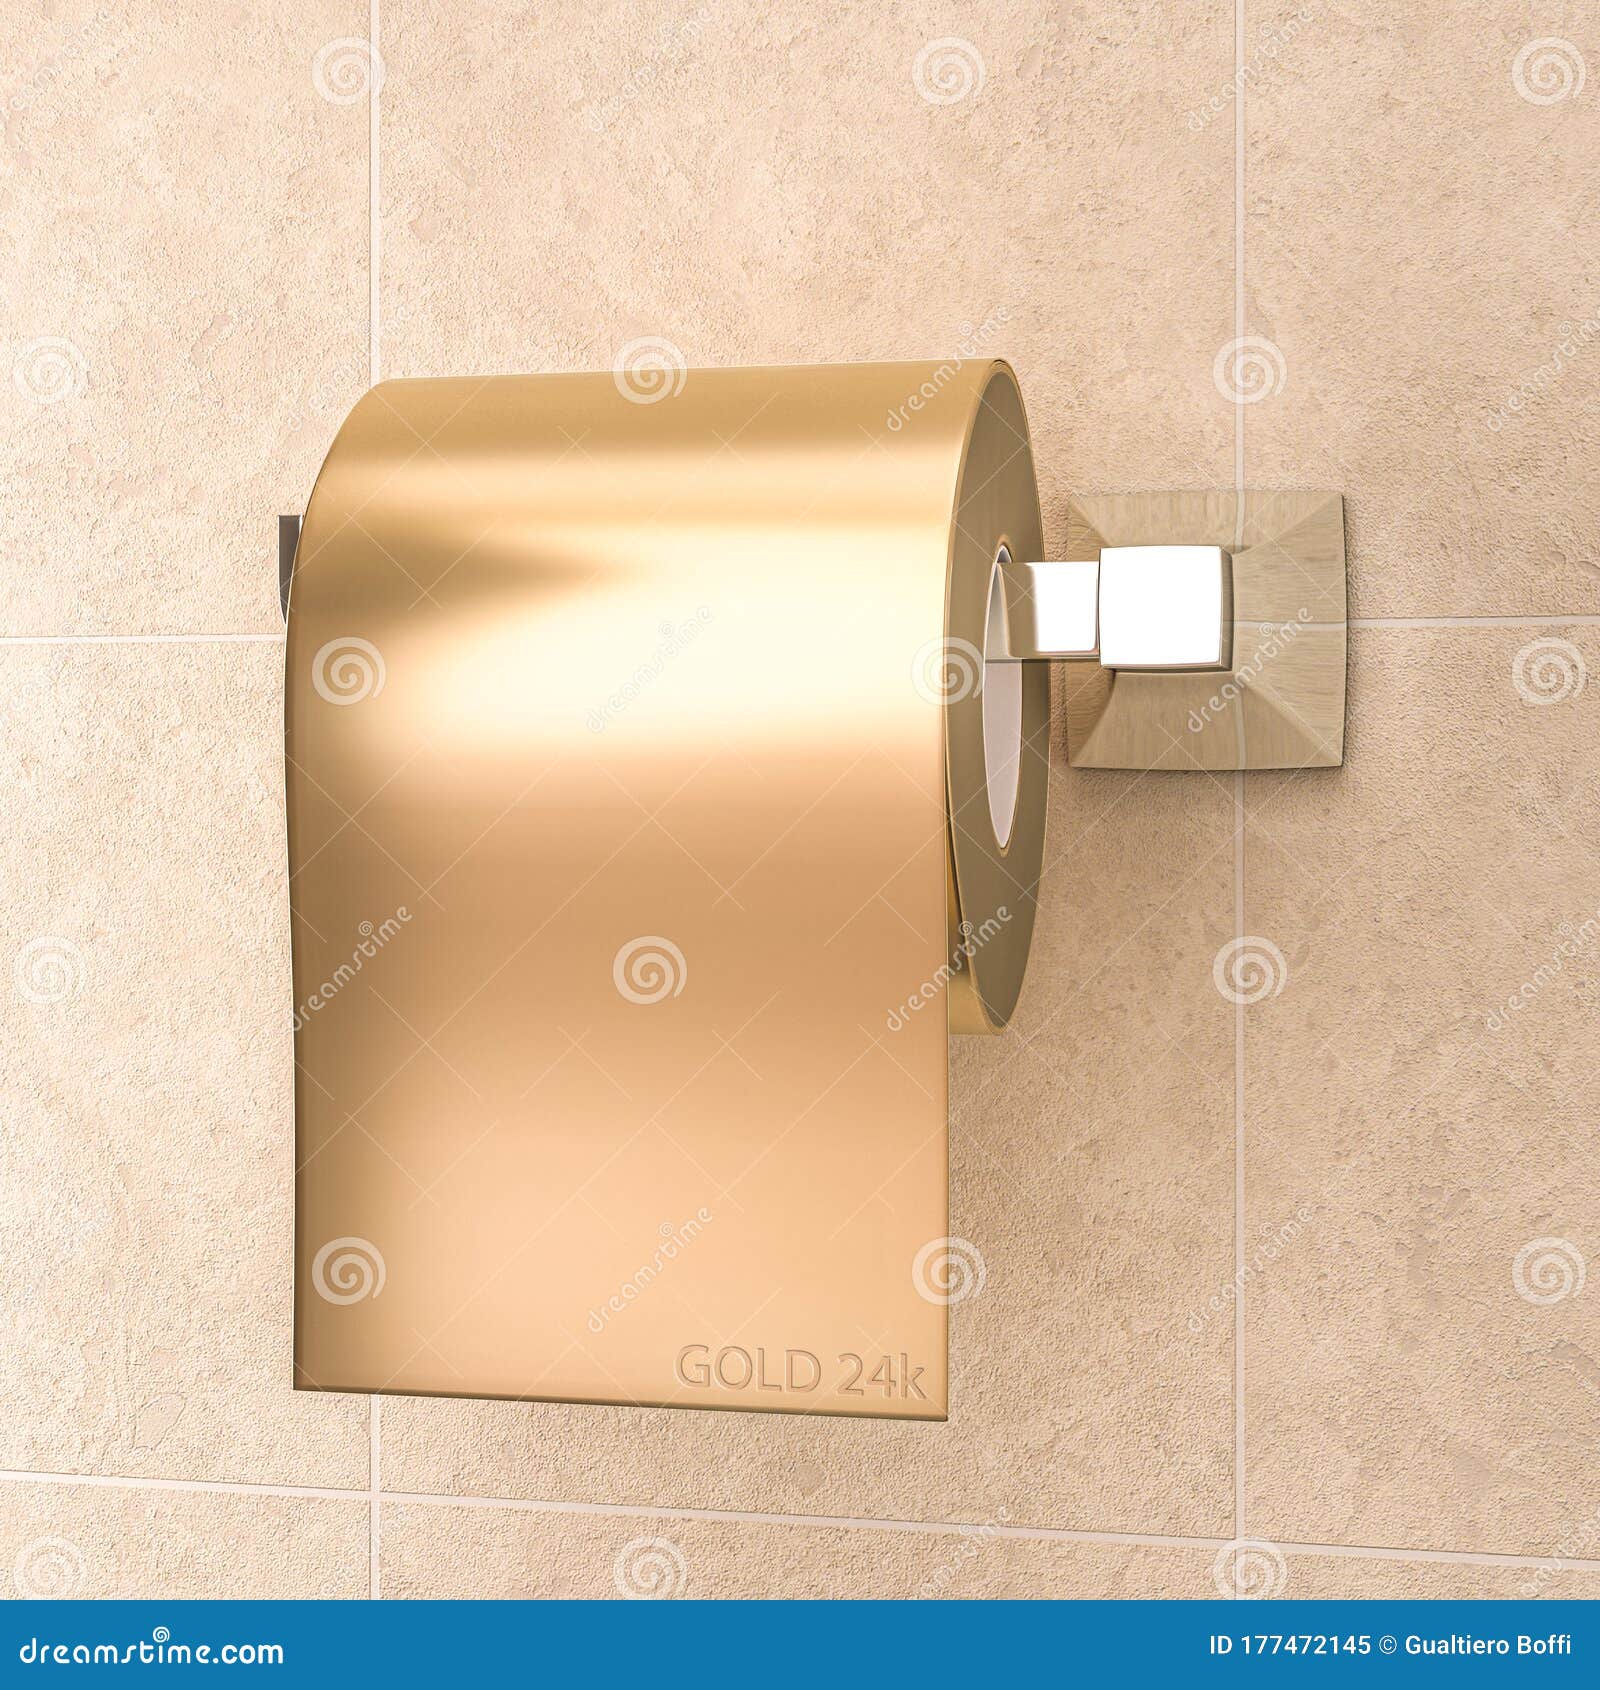 Details about   Brown Ceramic Toilet Paper TP Holder Mexican Sand Desert Classic Color 148 K174 